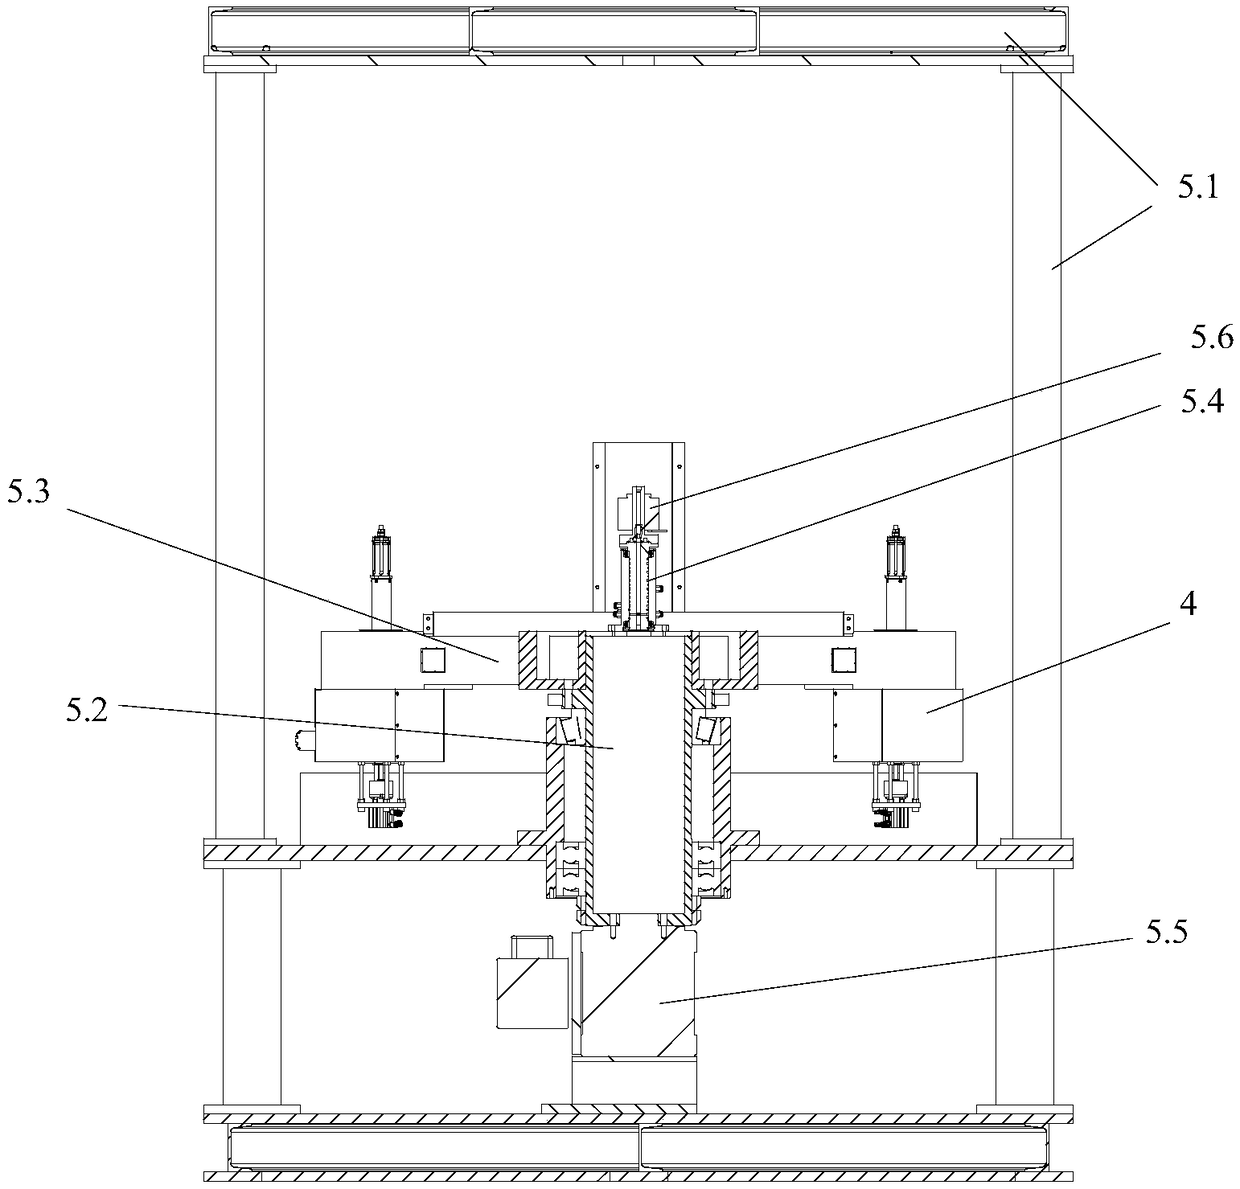 Multi-station full-automatic welding equipment for fan impeller machining